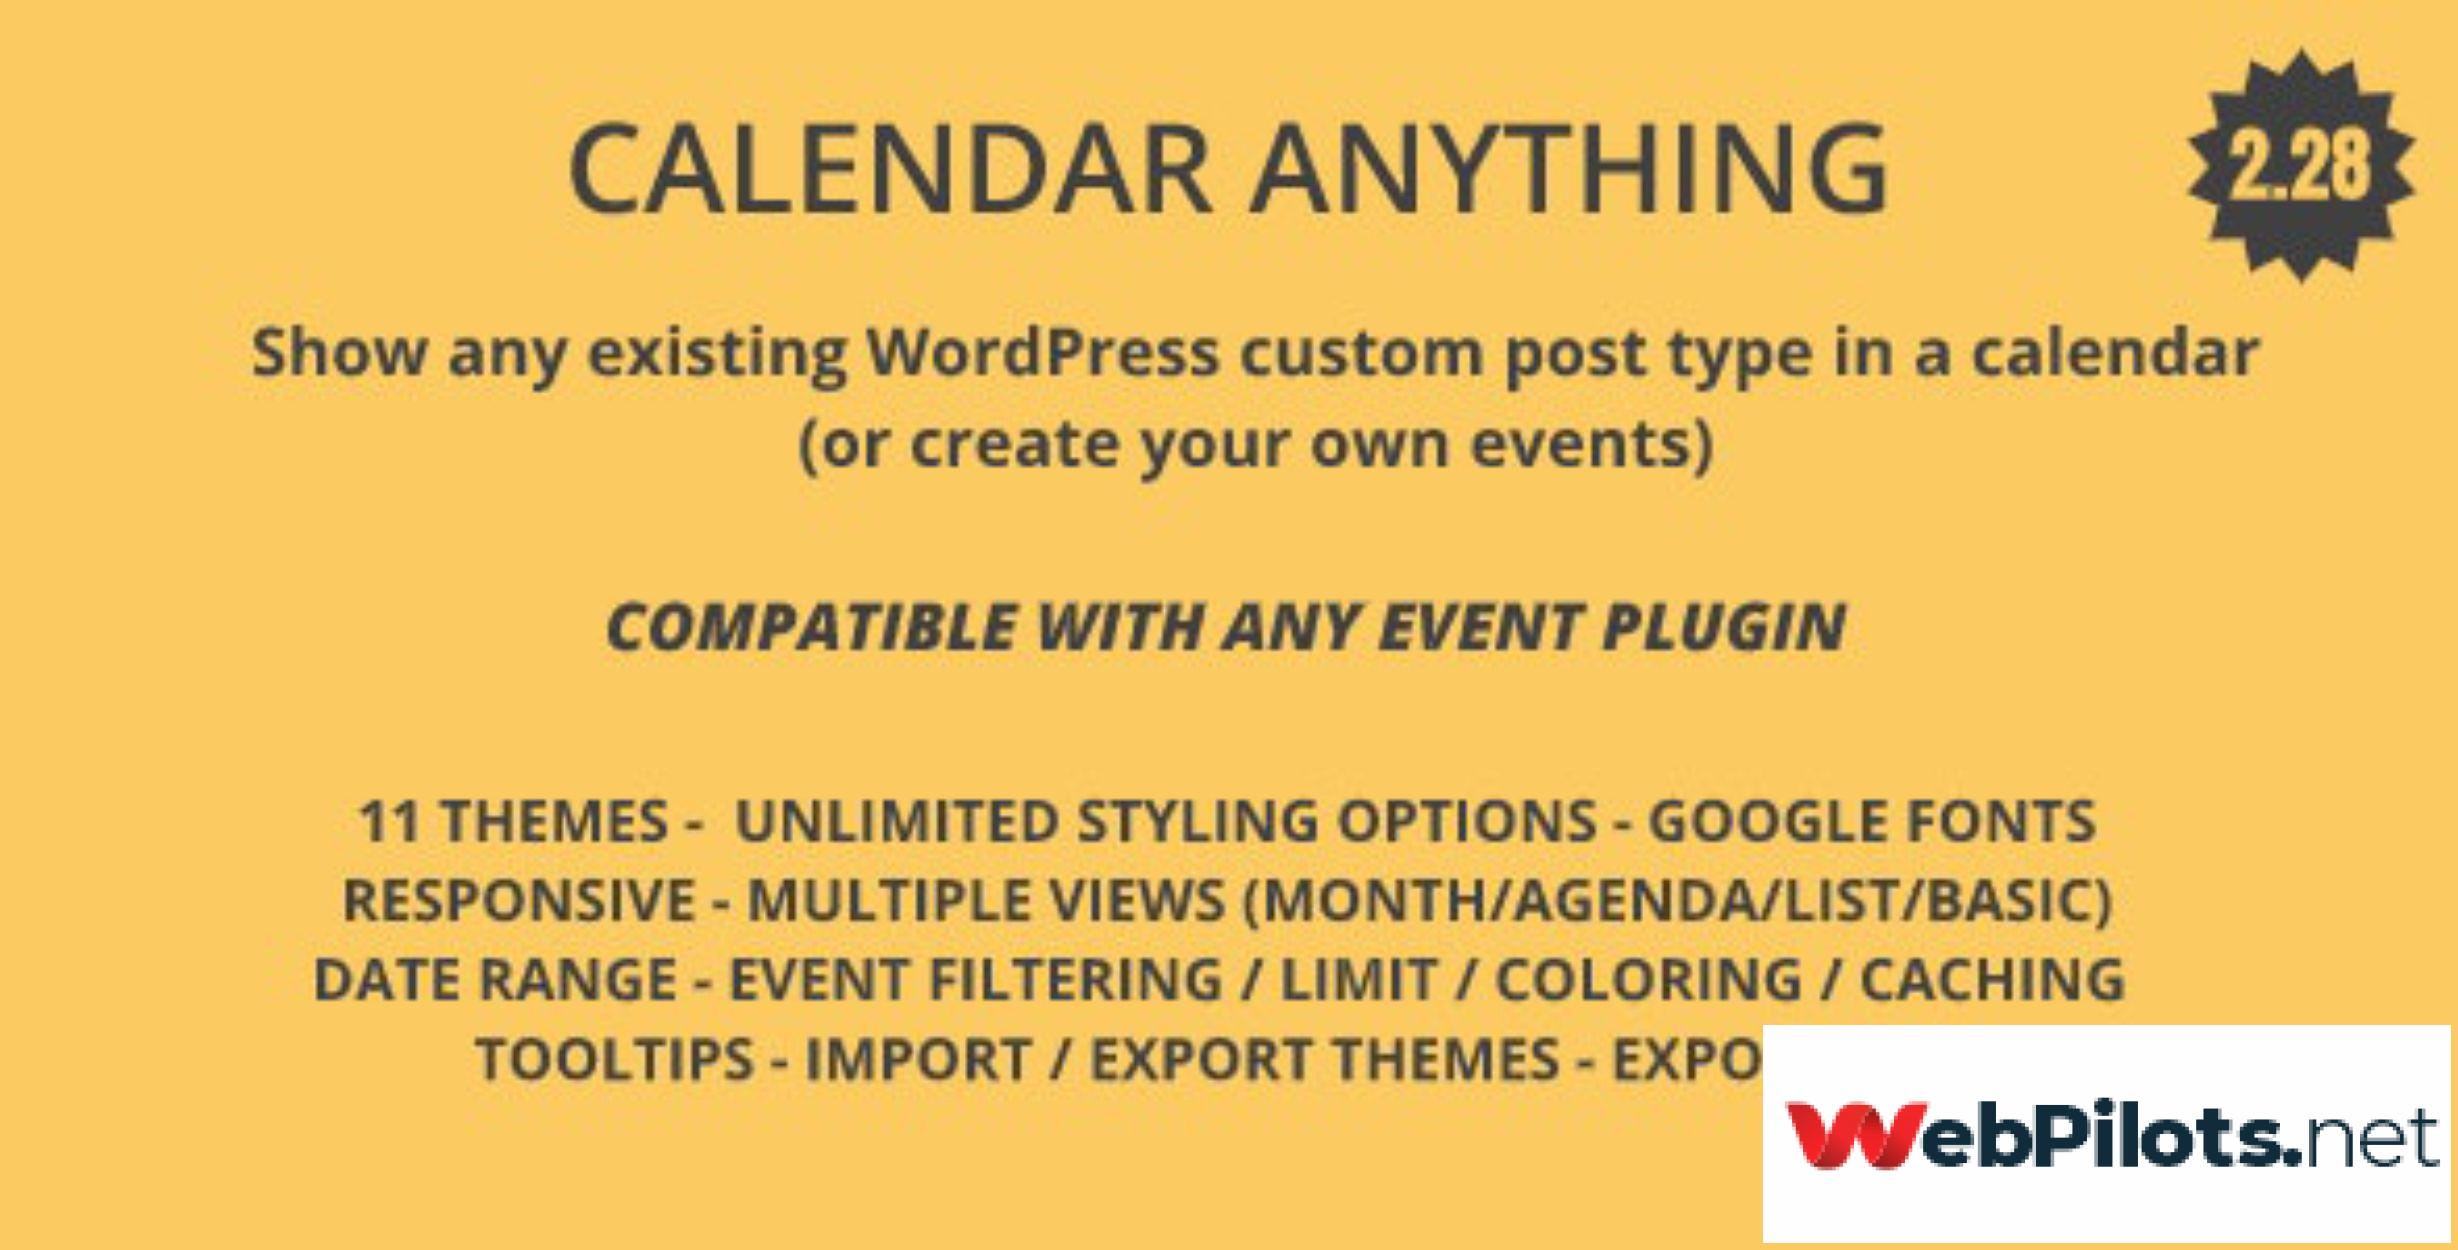 Untitled 1.jpgCalendar Anything v2.28 Show any existing WordPress custom post type in a calendar